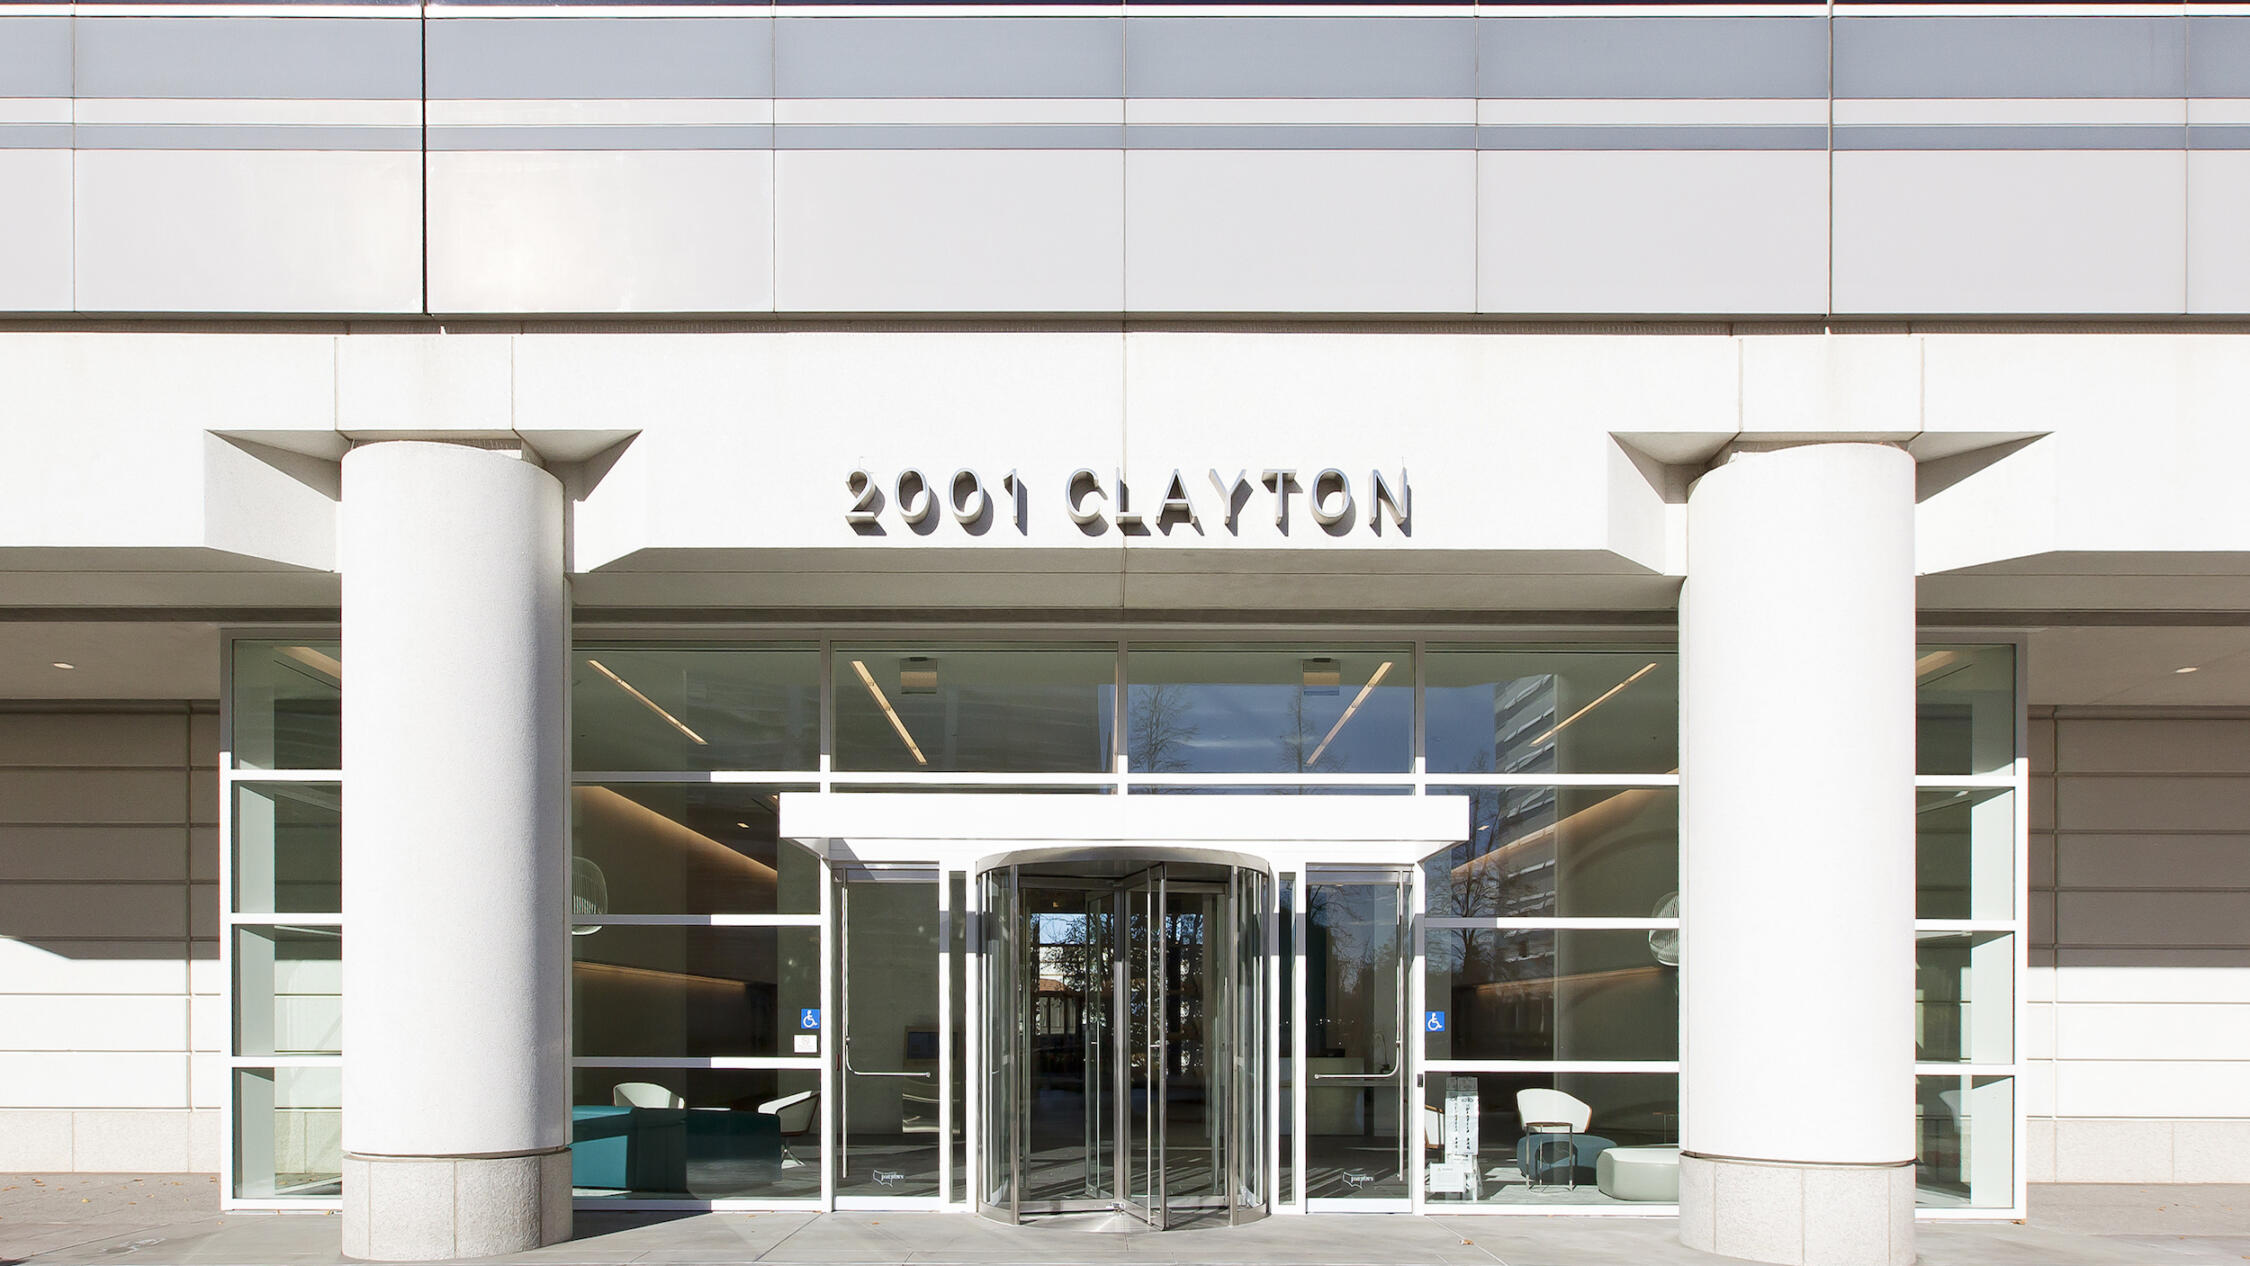 2001 Clayton exterior lobby entrance